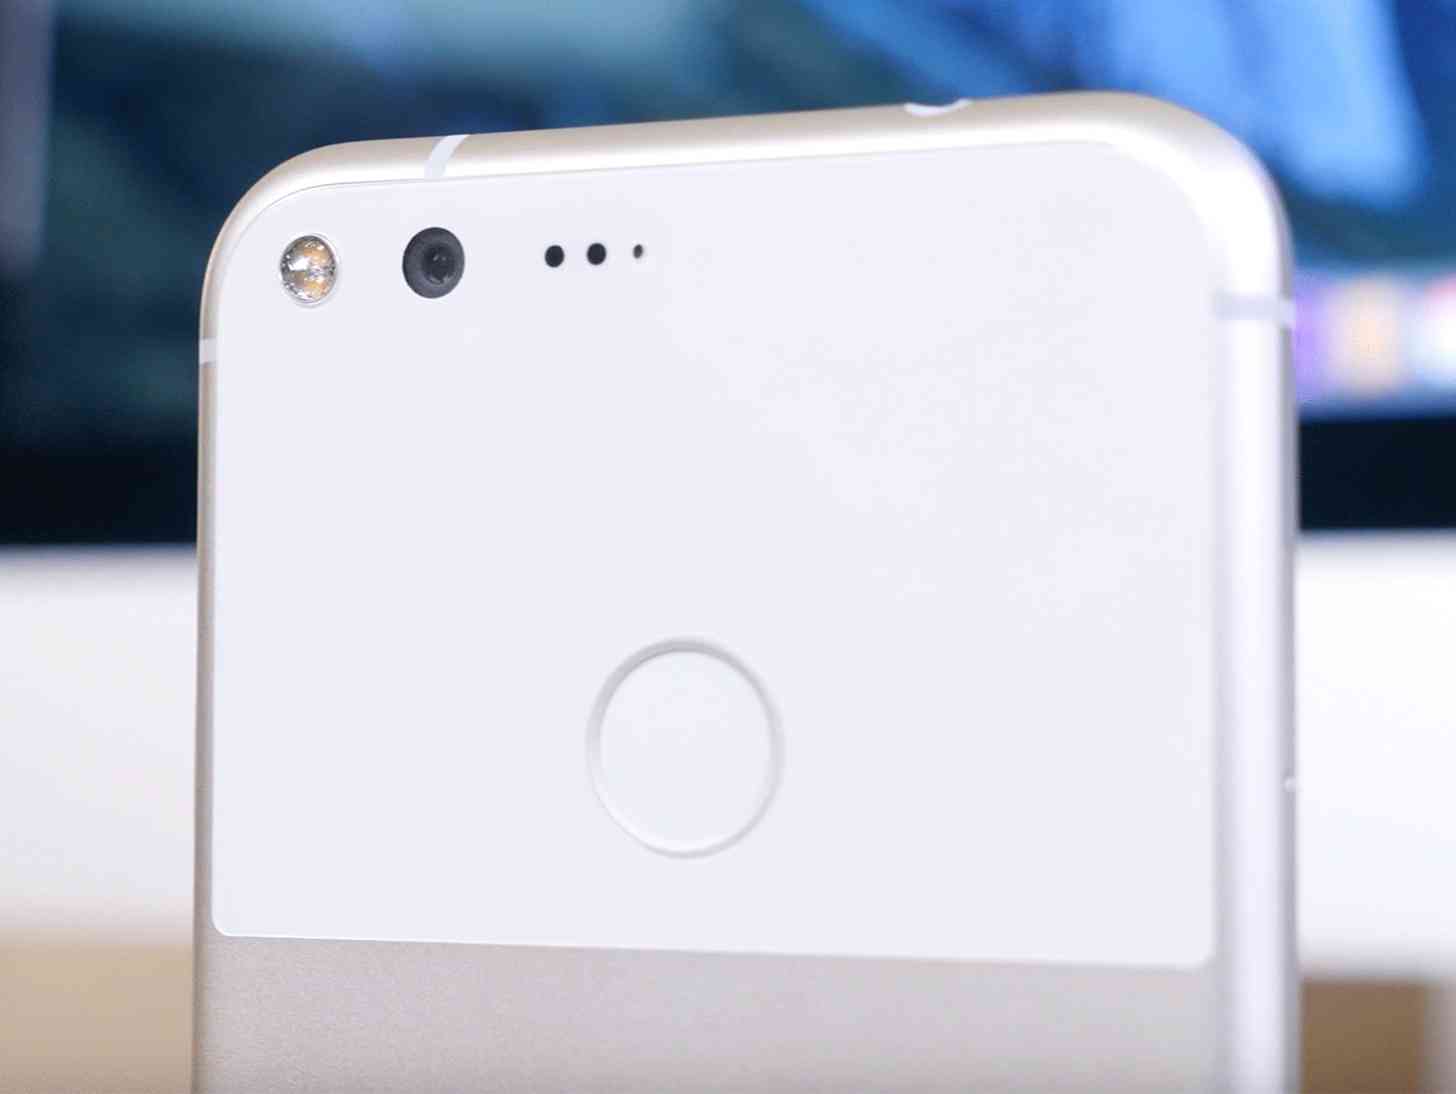 Google Pixel rear camera